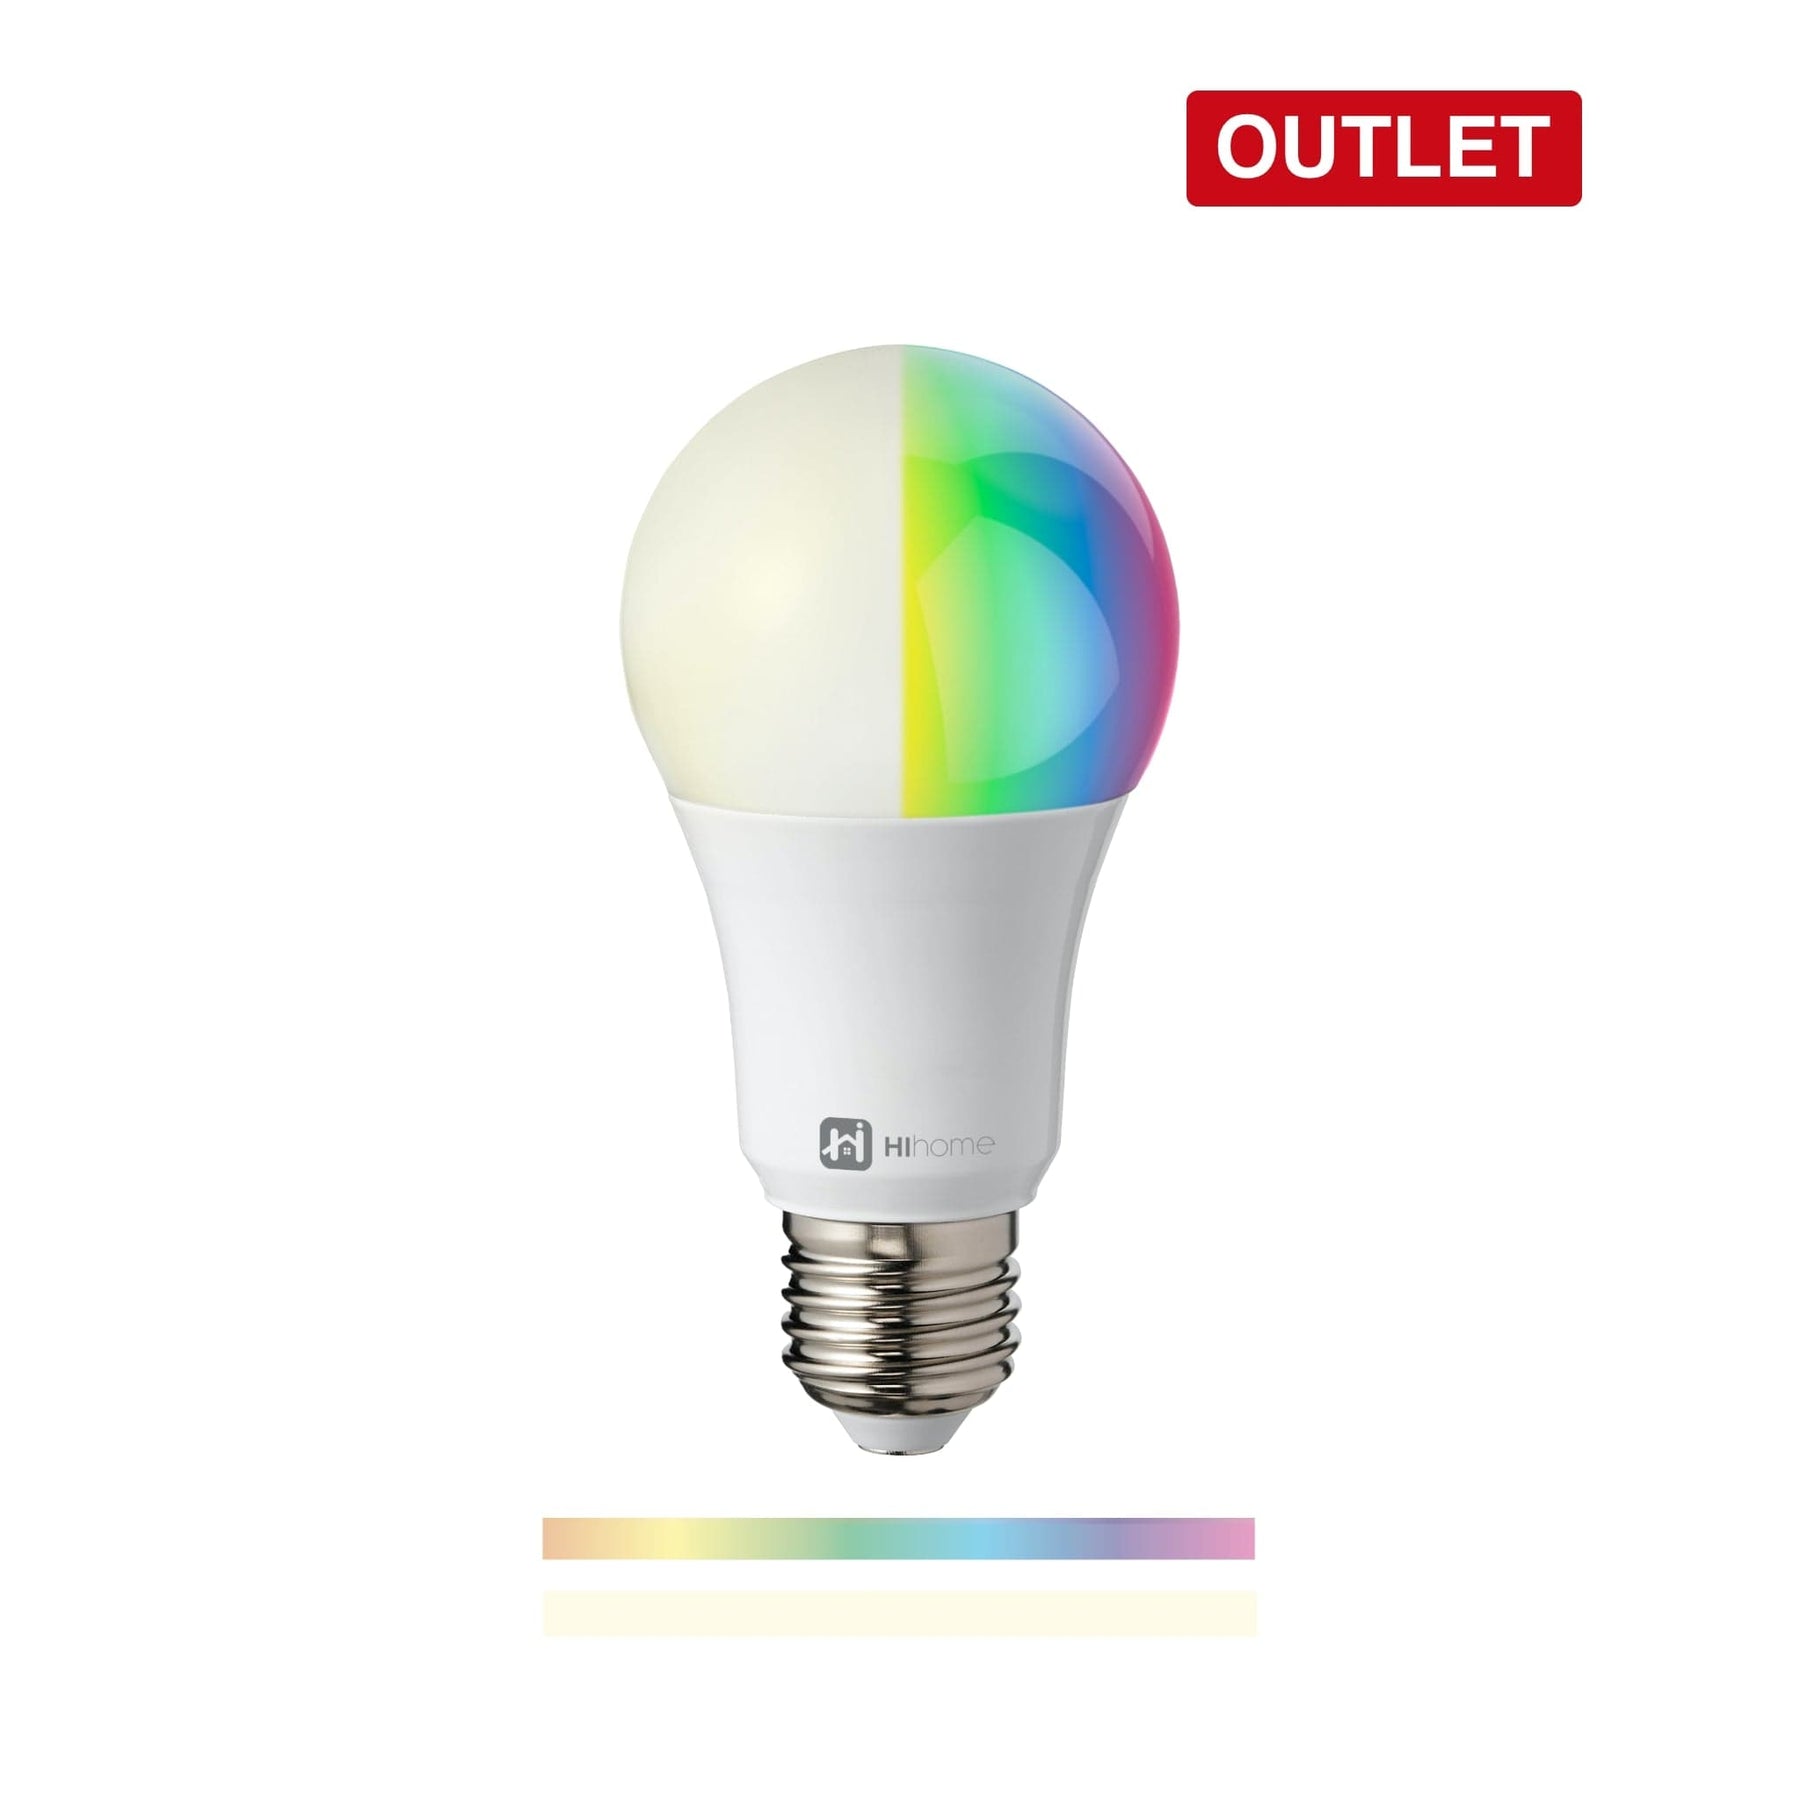 Hihome Ambience RGB + warm white LED WiFi bulb